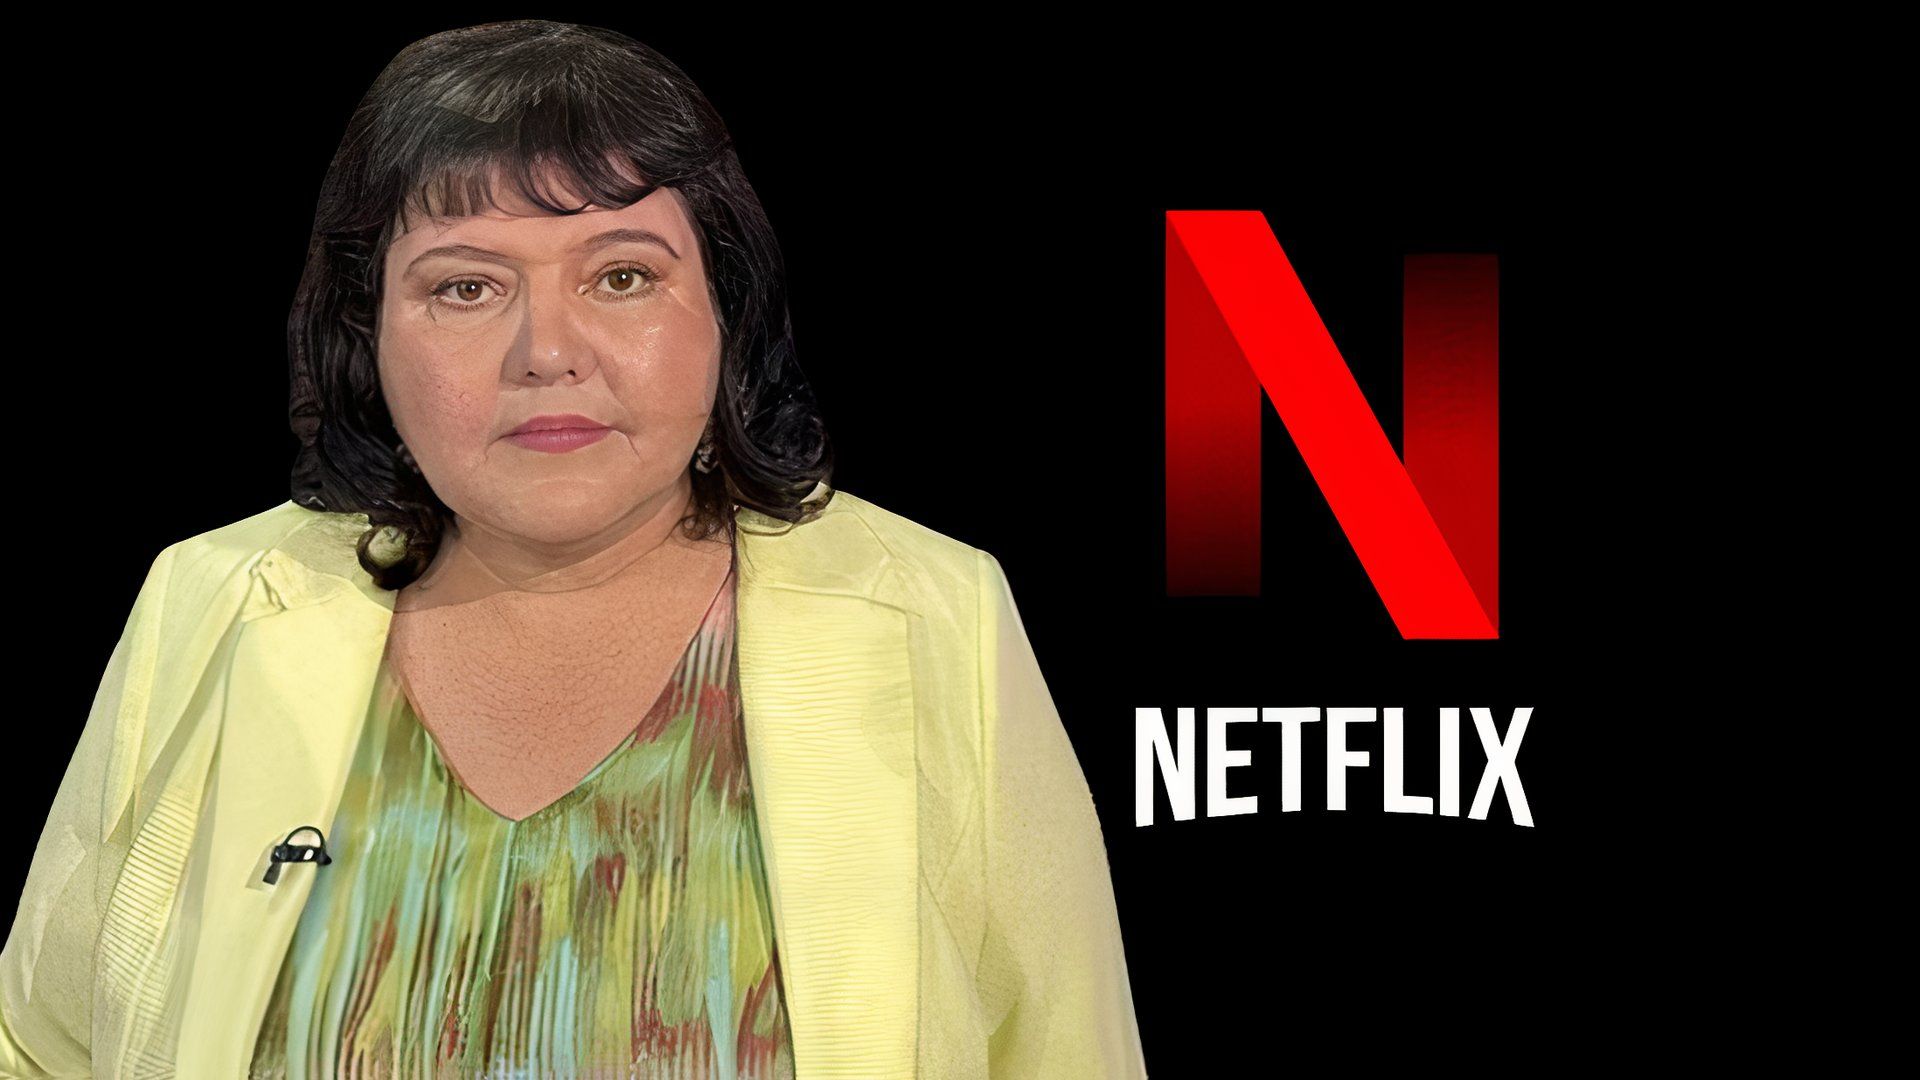 An image of Fiona Harvey over the Netflix logo